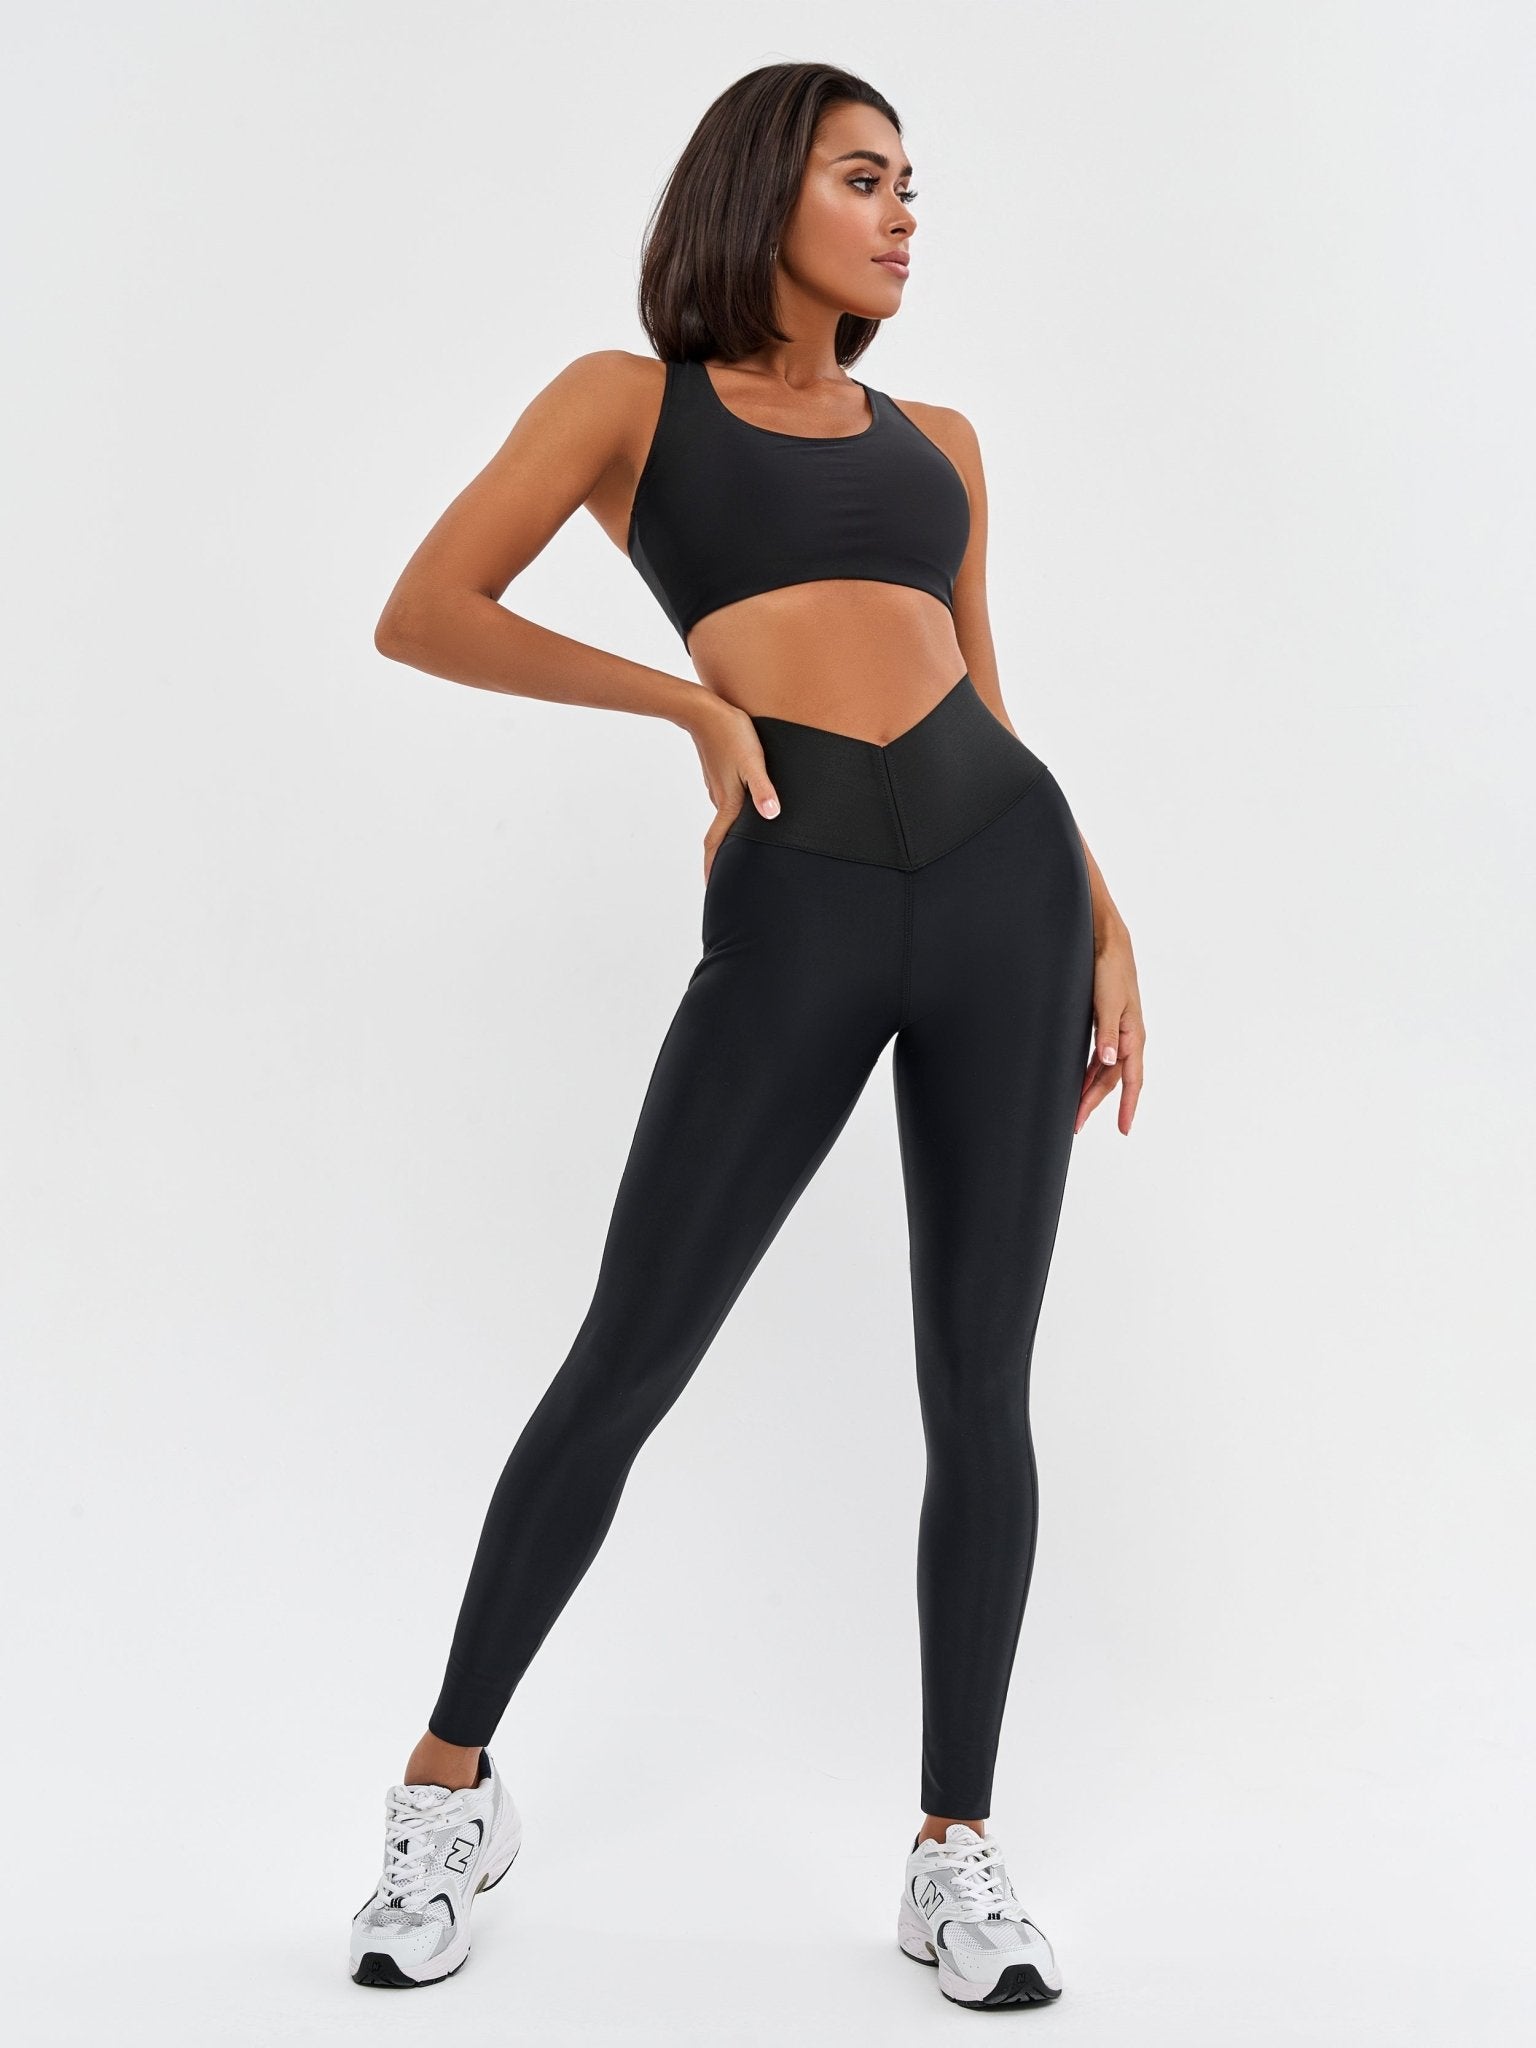 Bona Fide High Quality High Waist Leggings for Women with Unique Design and  Tummy Control - Women Workout Leggings, Push-up corset, black : :  Fashion